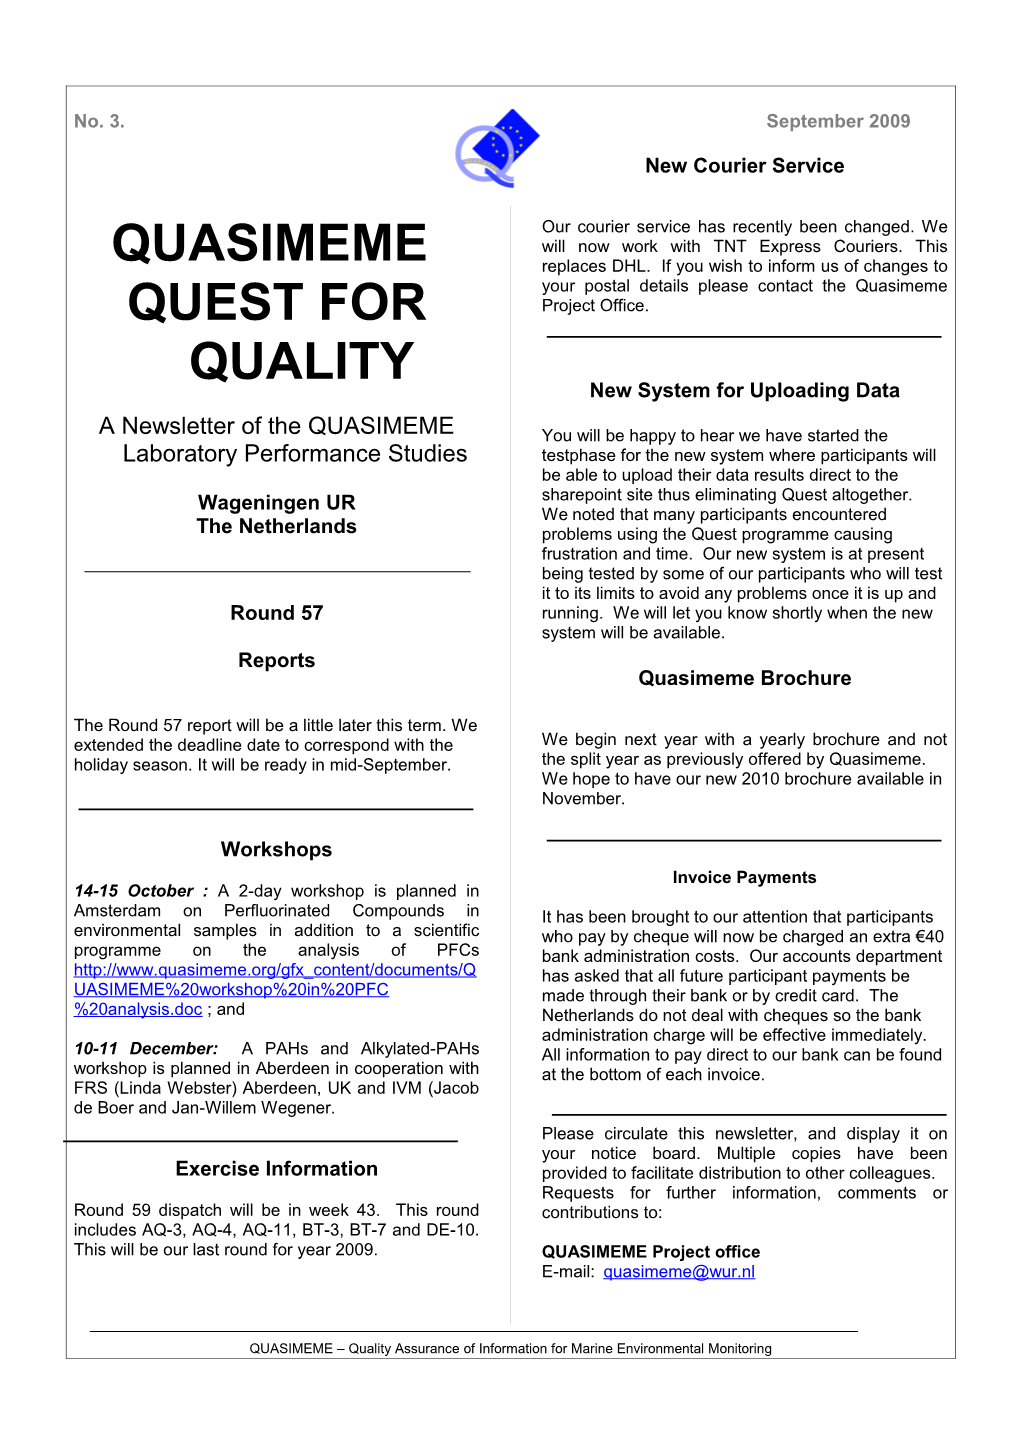 A Newsletter of the QUASIMEME Laboratory Performance Studies